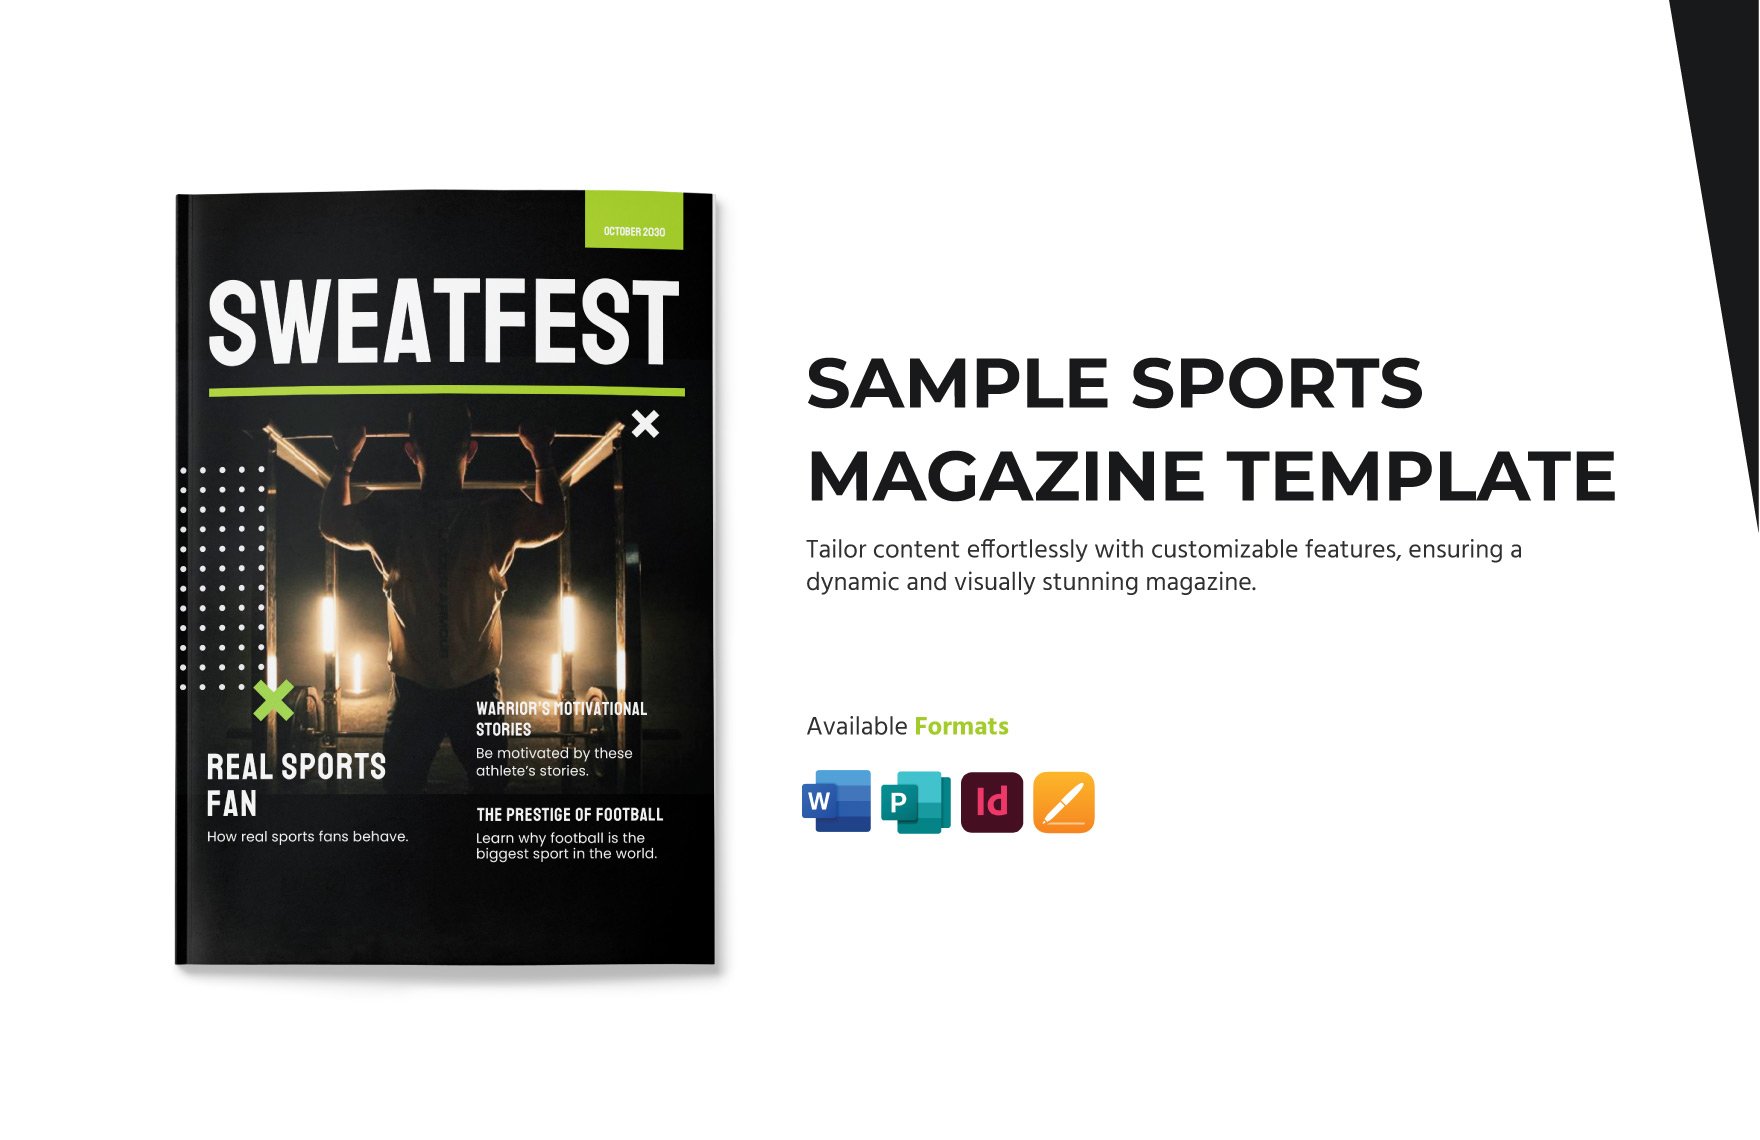 Sample Sports Magazine Template